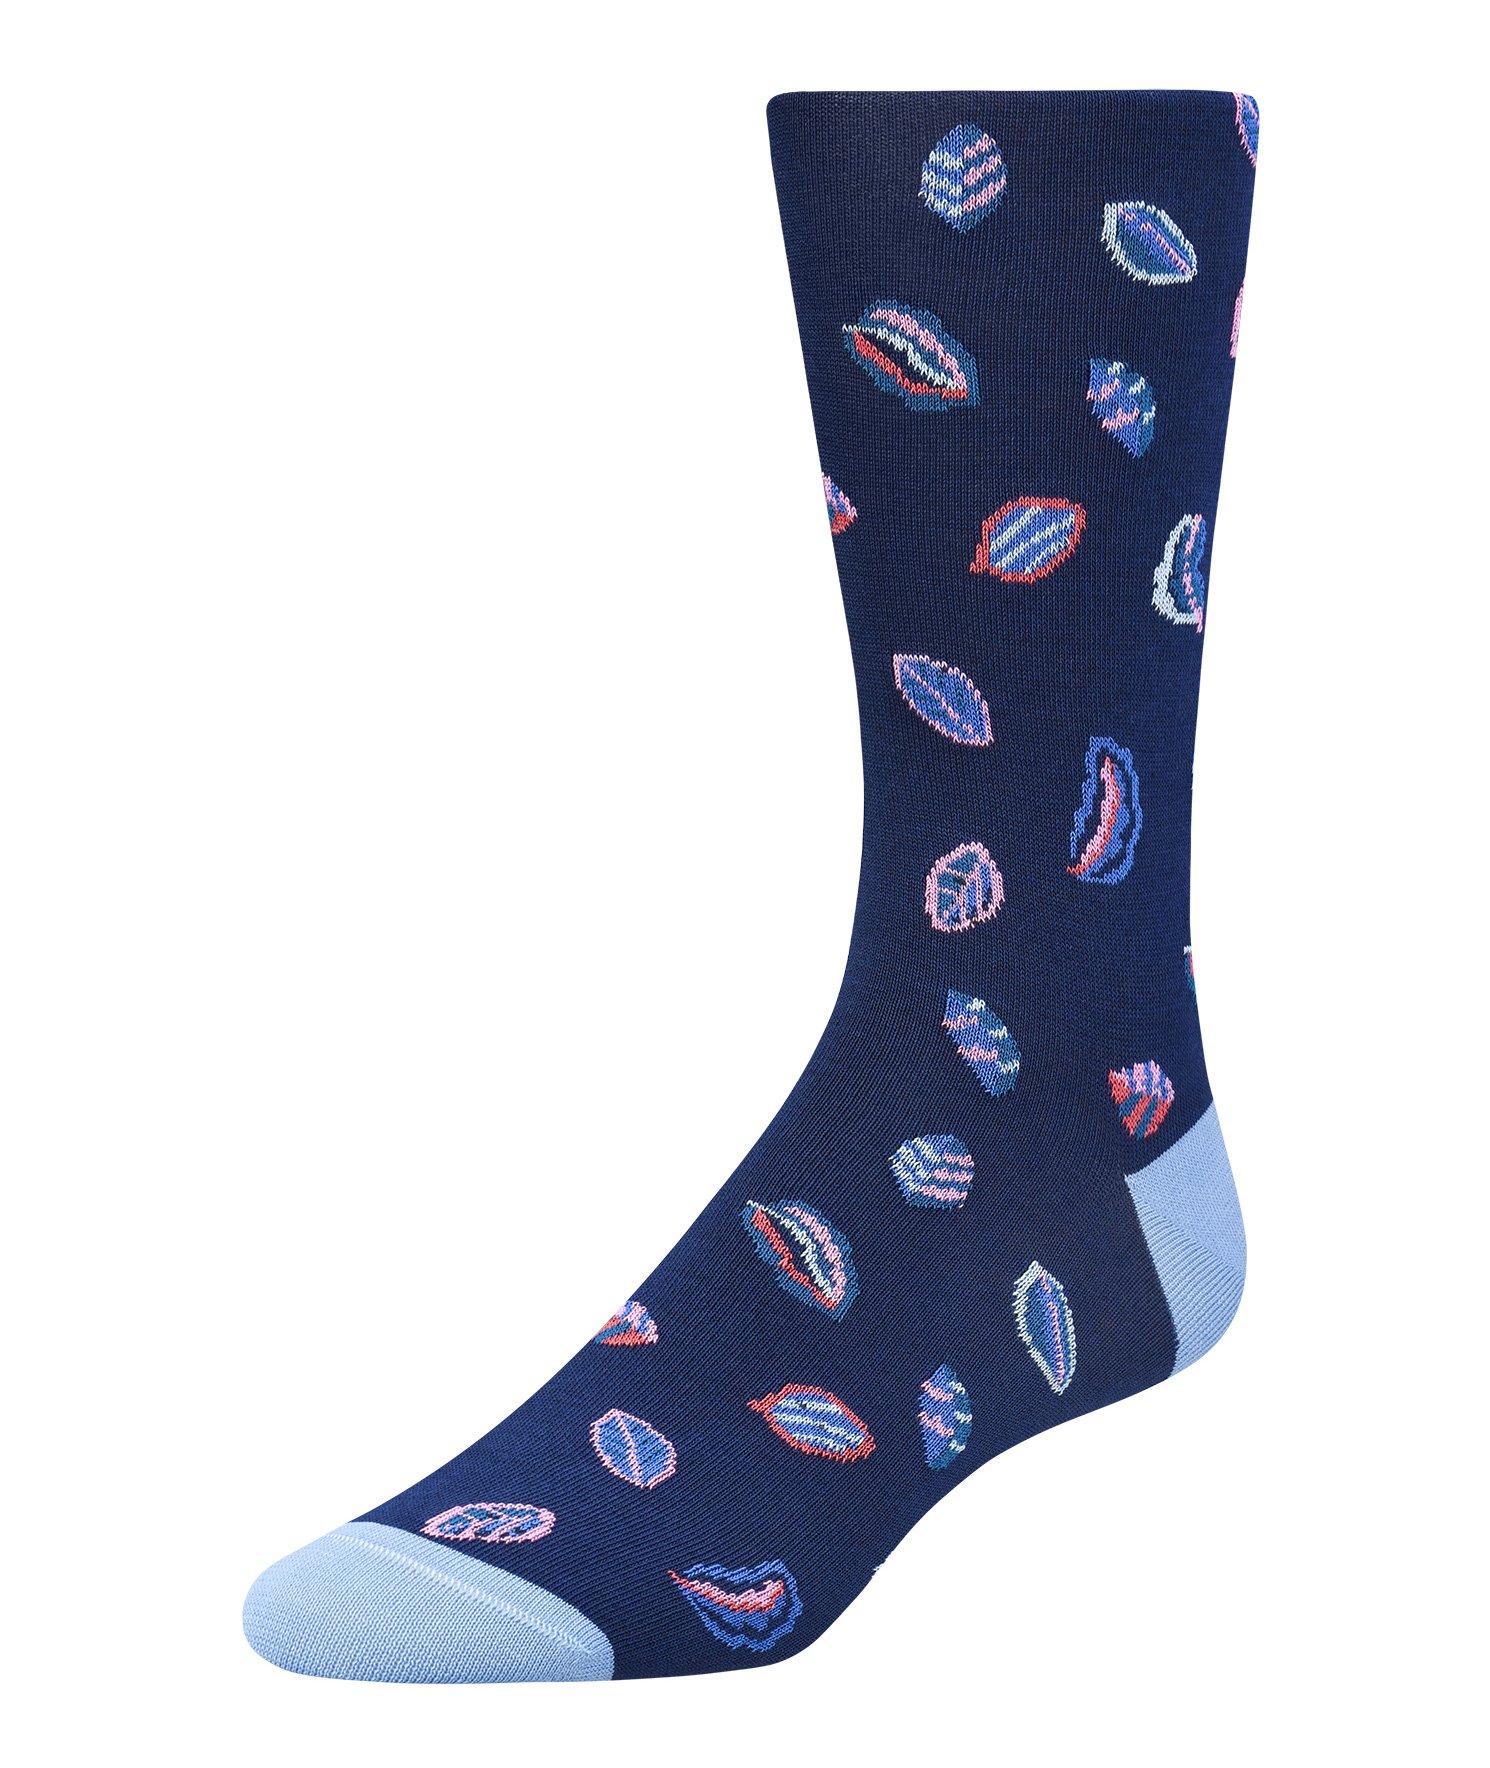 Mercerized Cotton Socks image 0